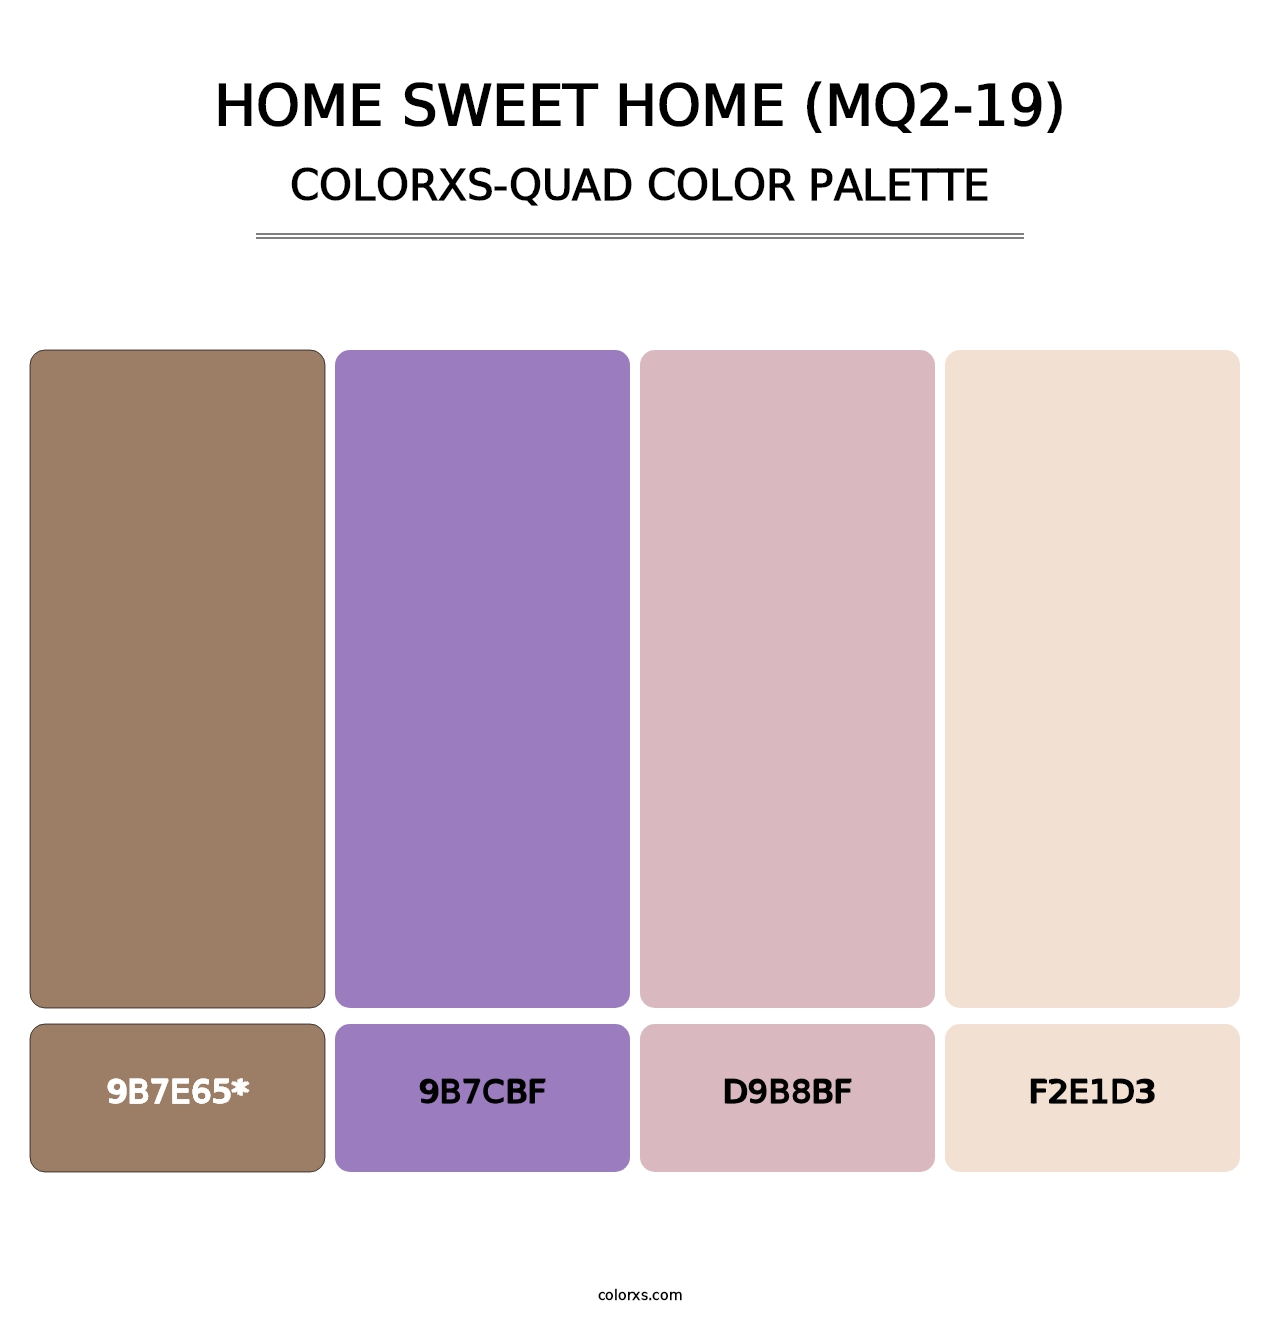 Home Sweet Home (MQ2-19) - Colorxs Quad Palette